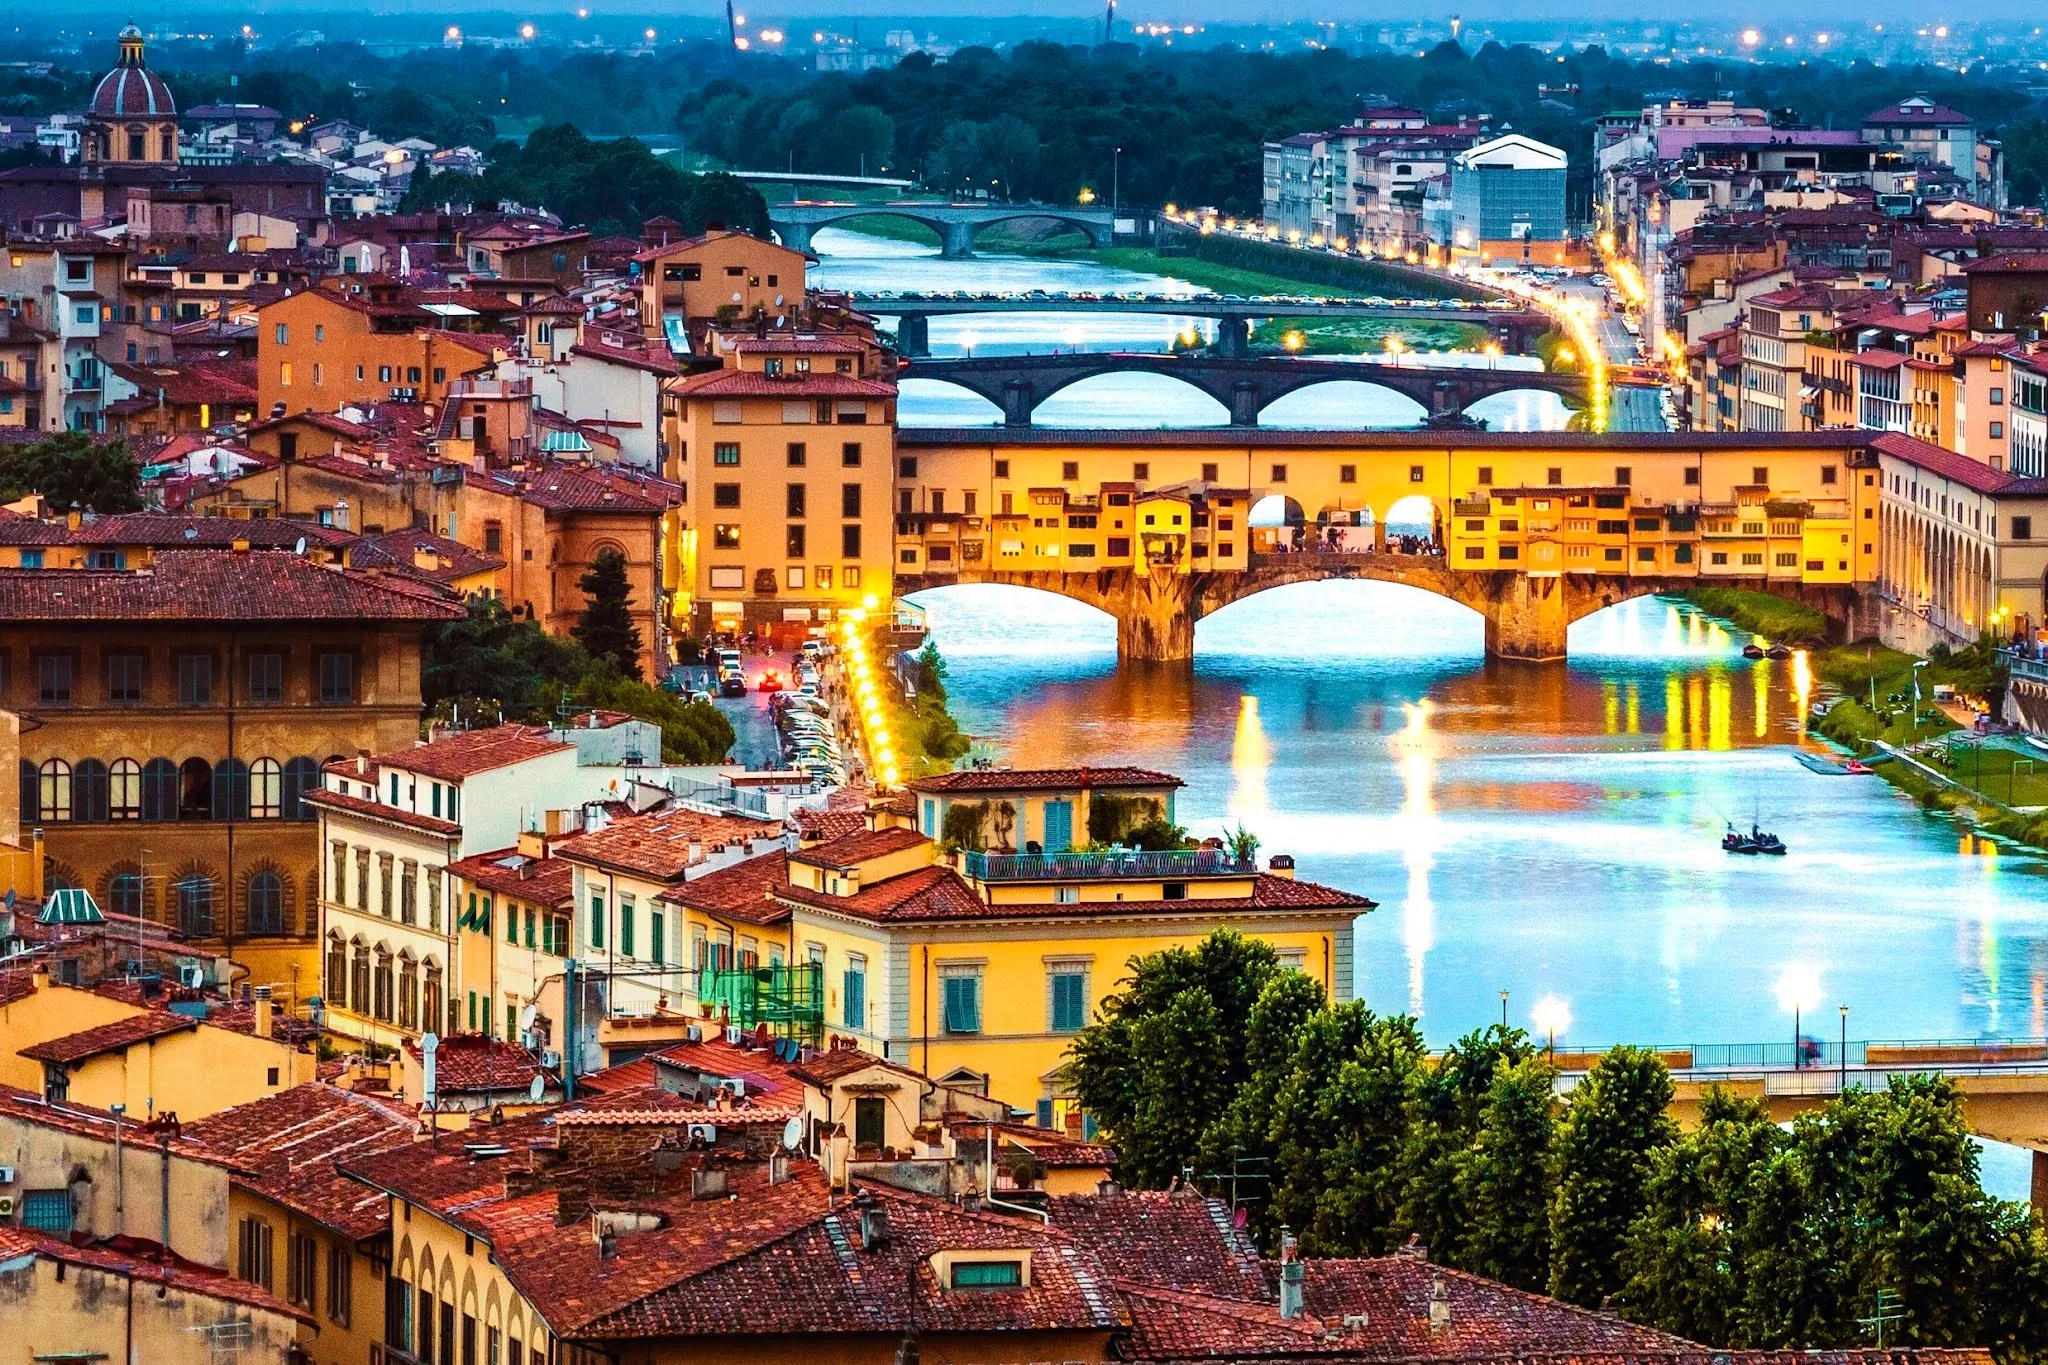  Tuscany (Florence, Siena, Pisa) Travel Guide